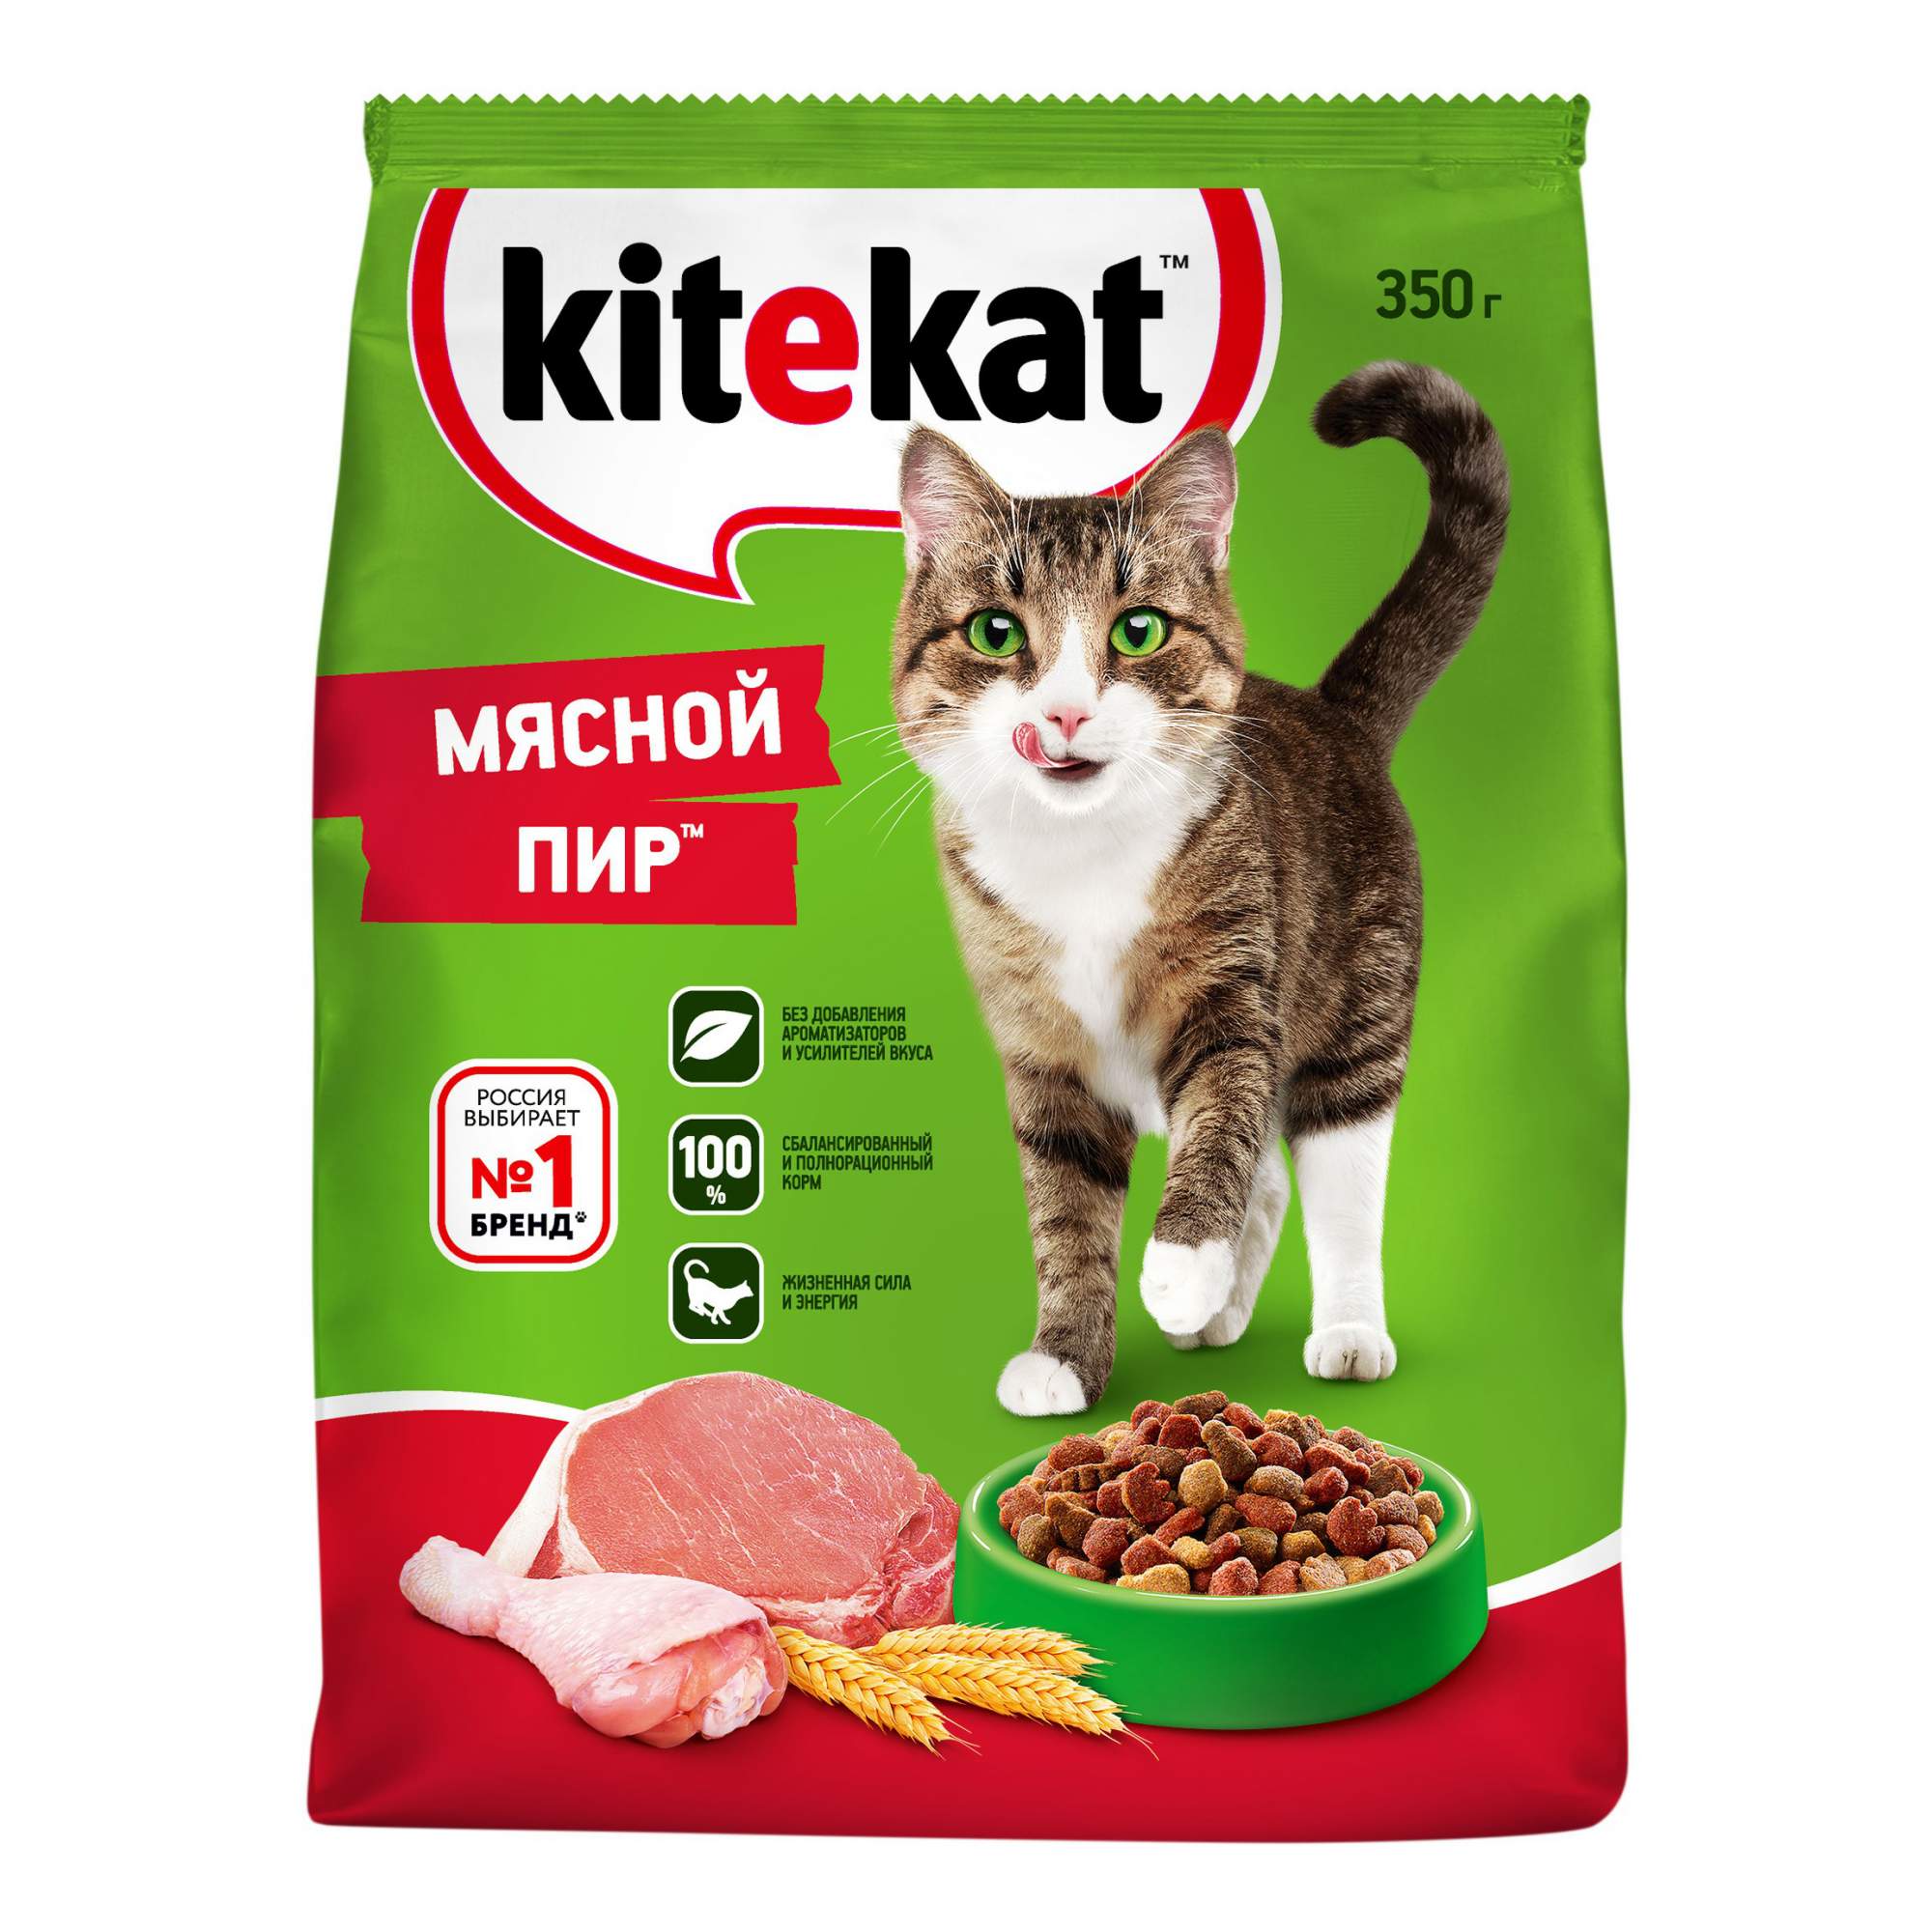 Купить сухой корм для кошек Kitekat Мясной пир с мясом, 350 г, цены на Мегамаркет | Артикул: 100046648883